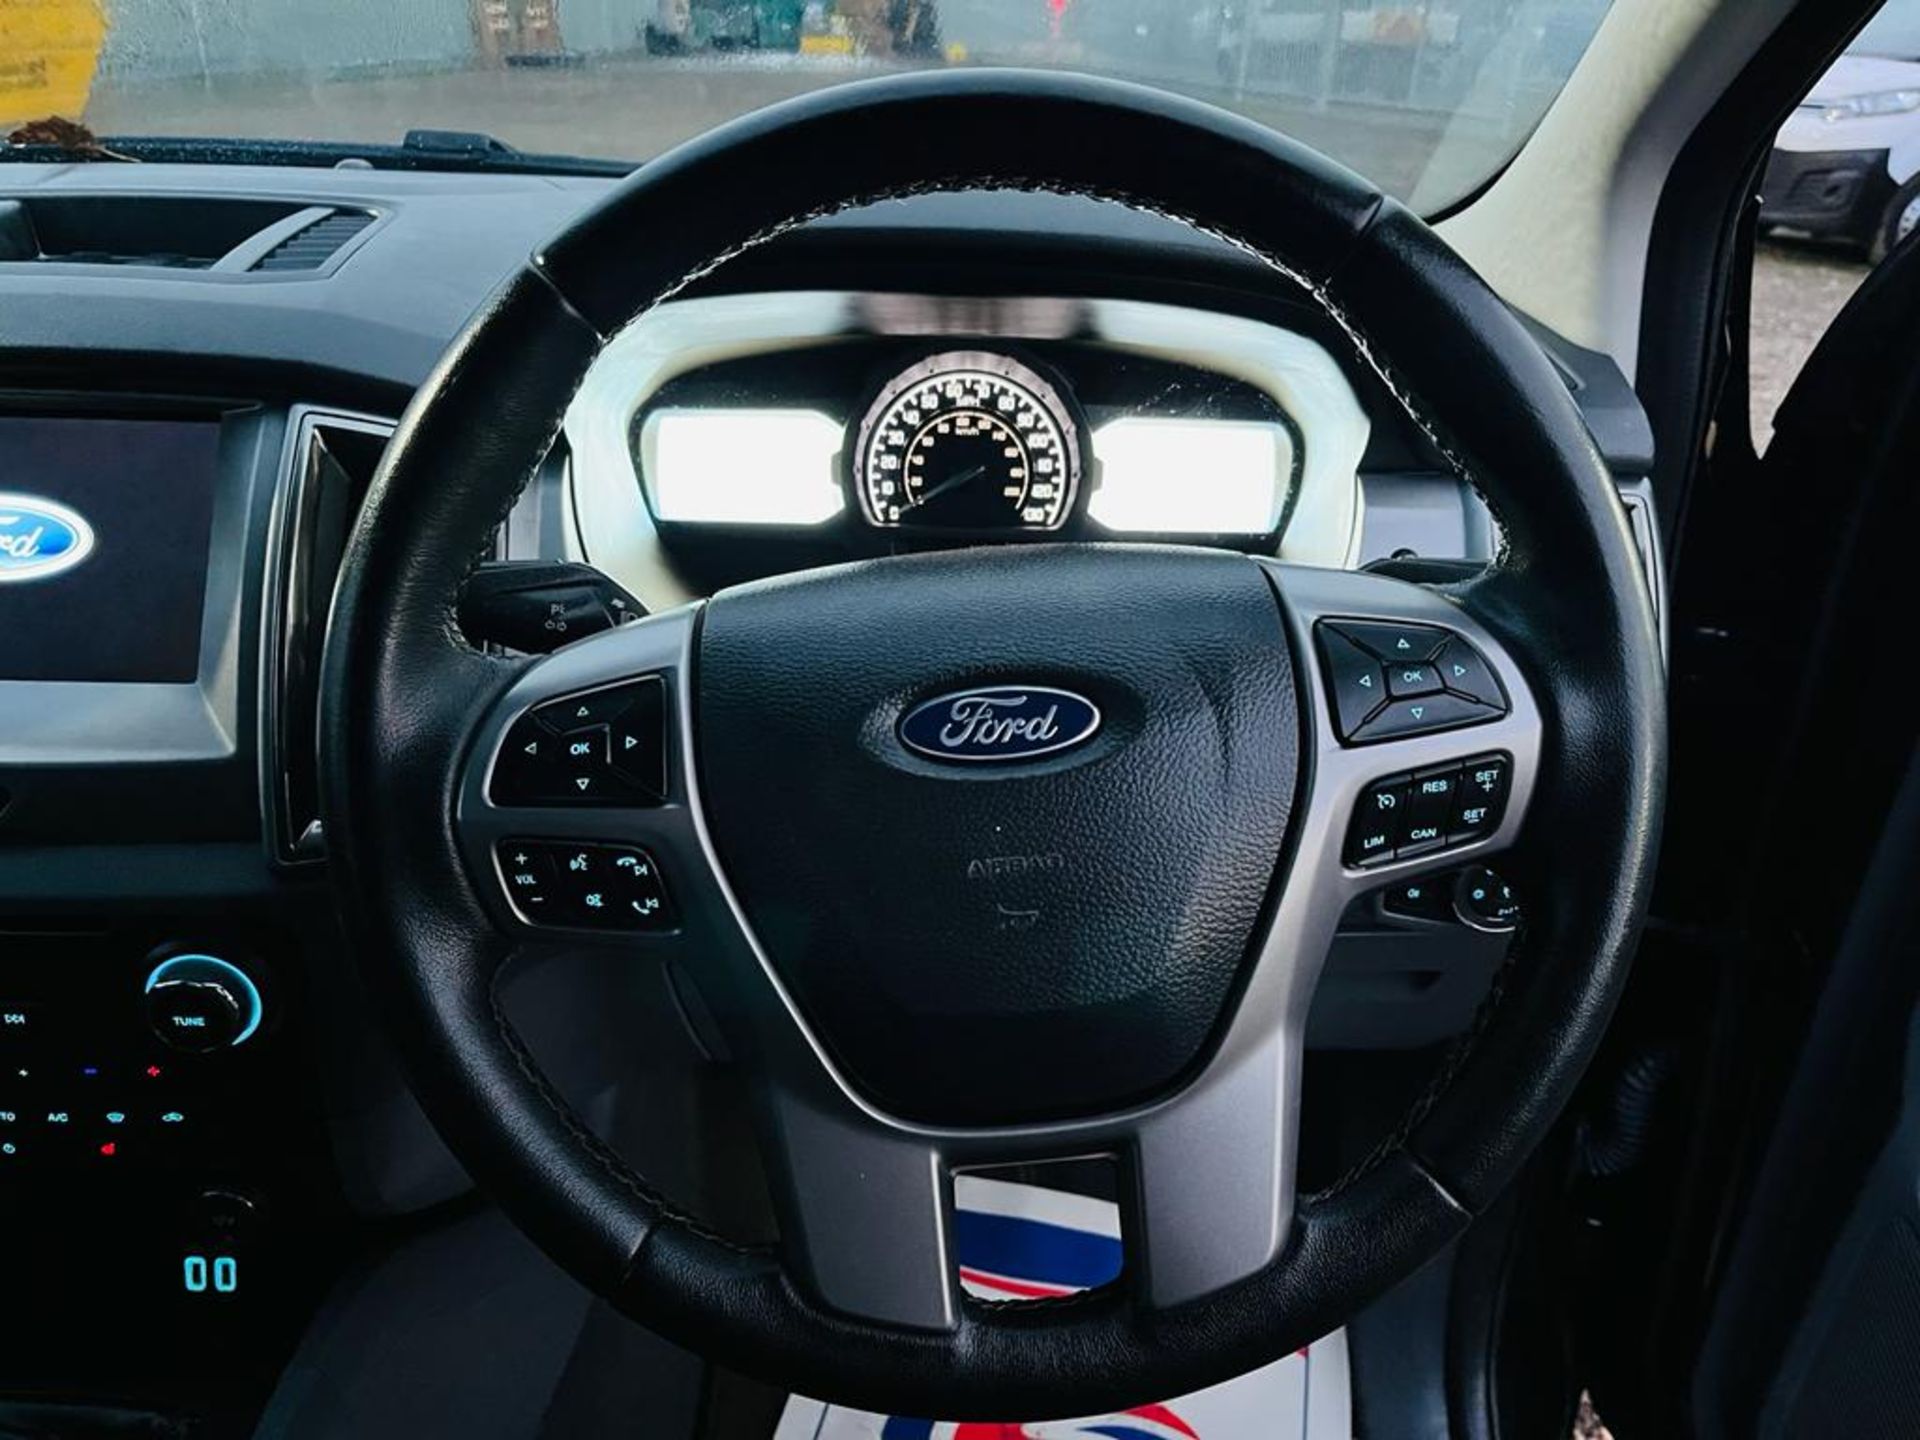 ** ON SALE ** Ford Ranger 3.2 TDCI Limited 4WD 200 2018 '18 Reg' Sat Nav - A/C - ULEZ Compliant - Image 21 of 24